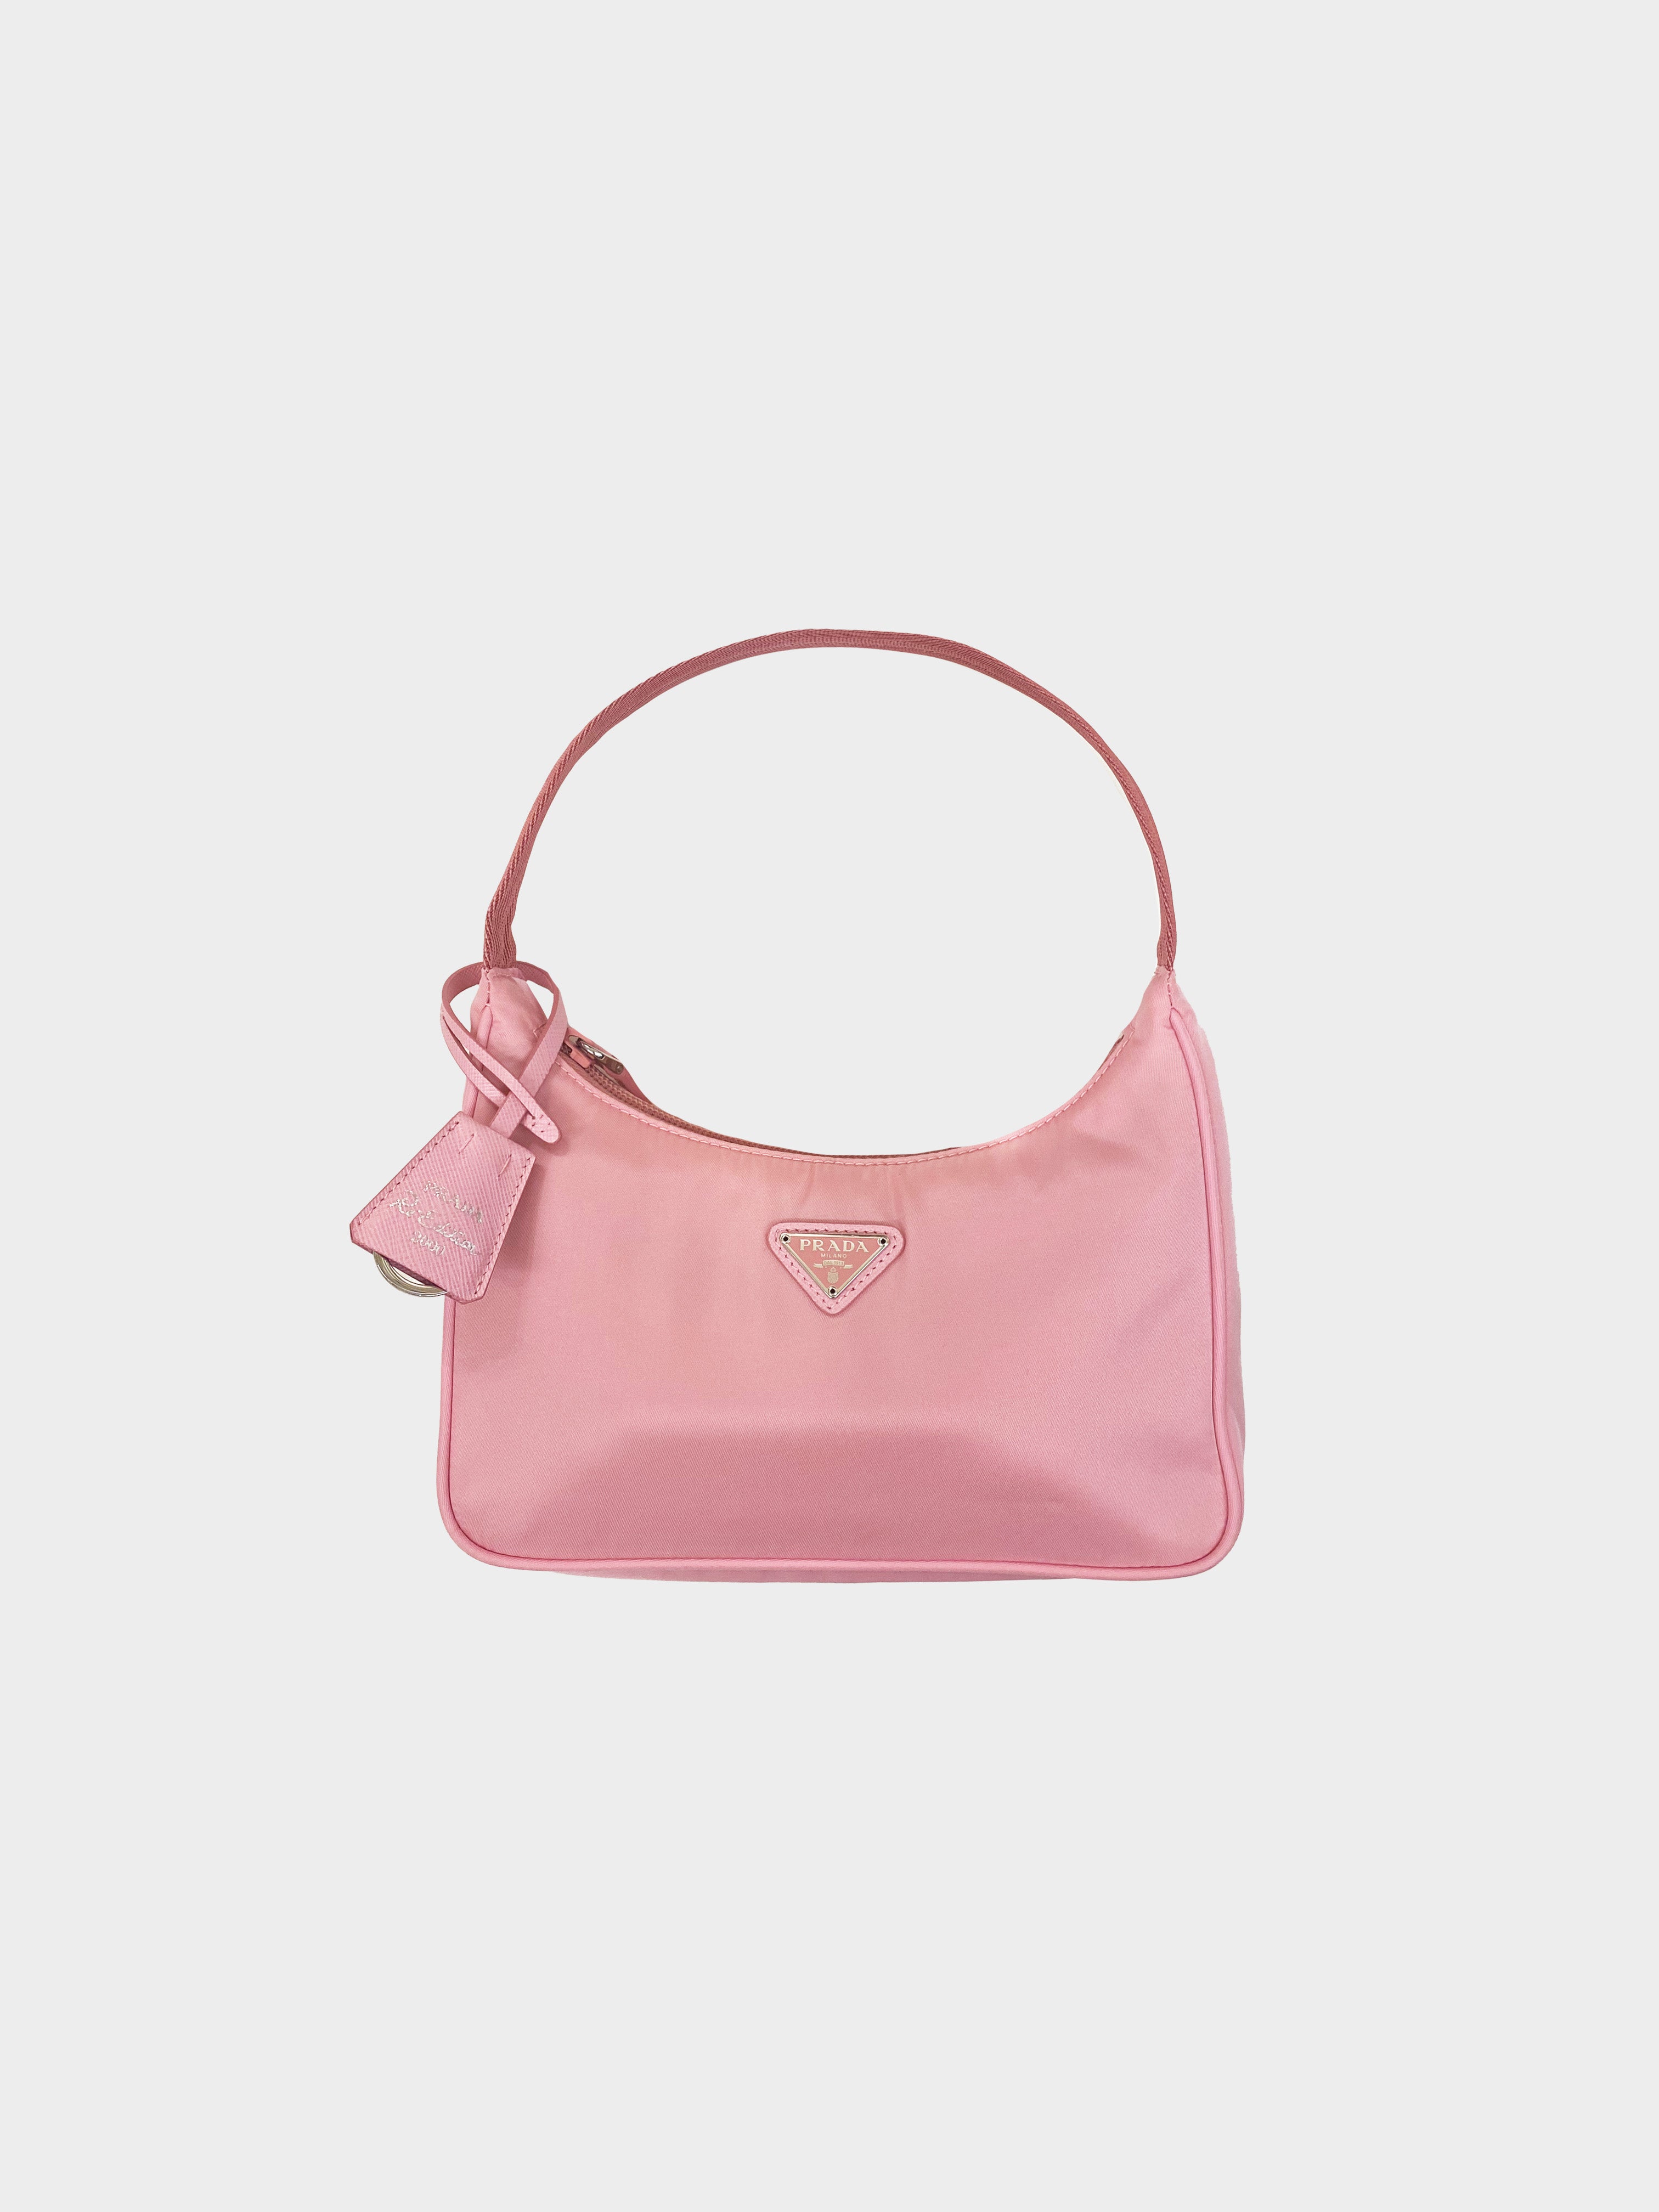 Prada Pink Re-nylon Padded Hobo Bag